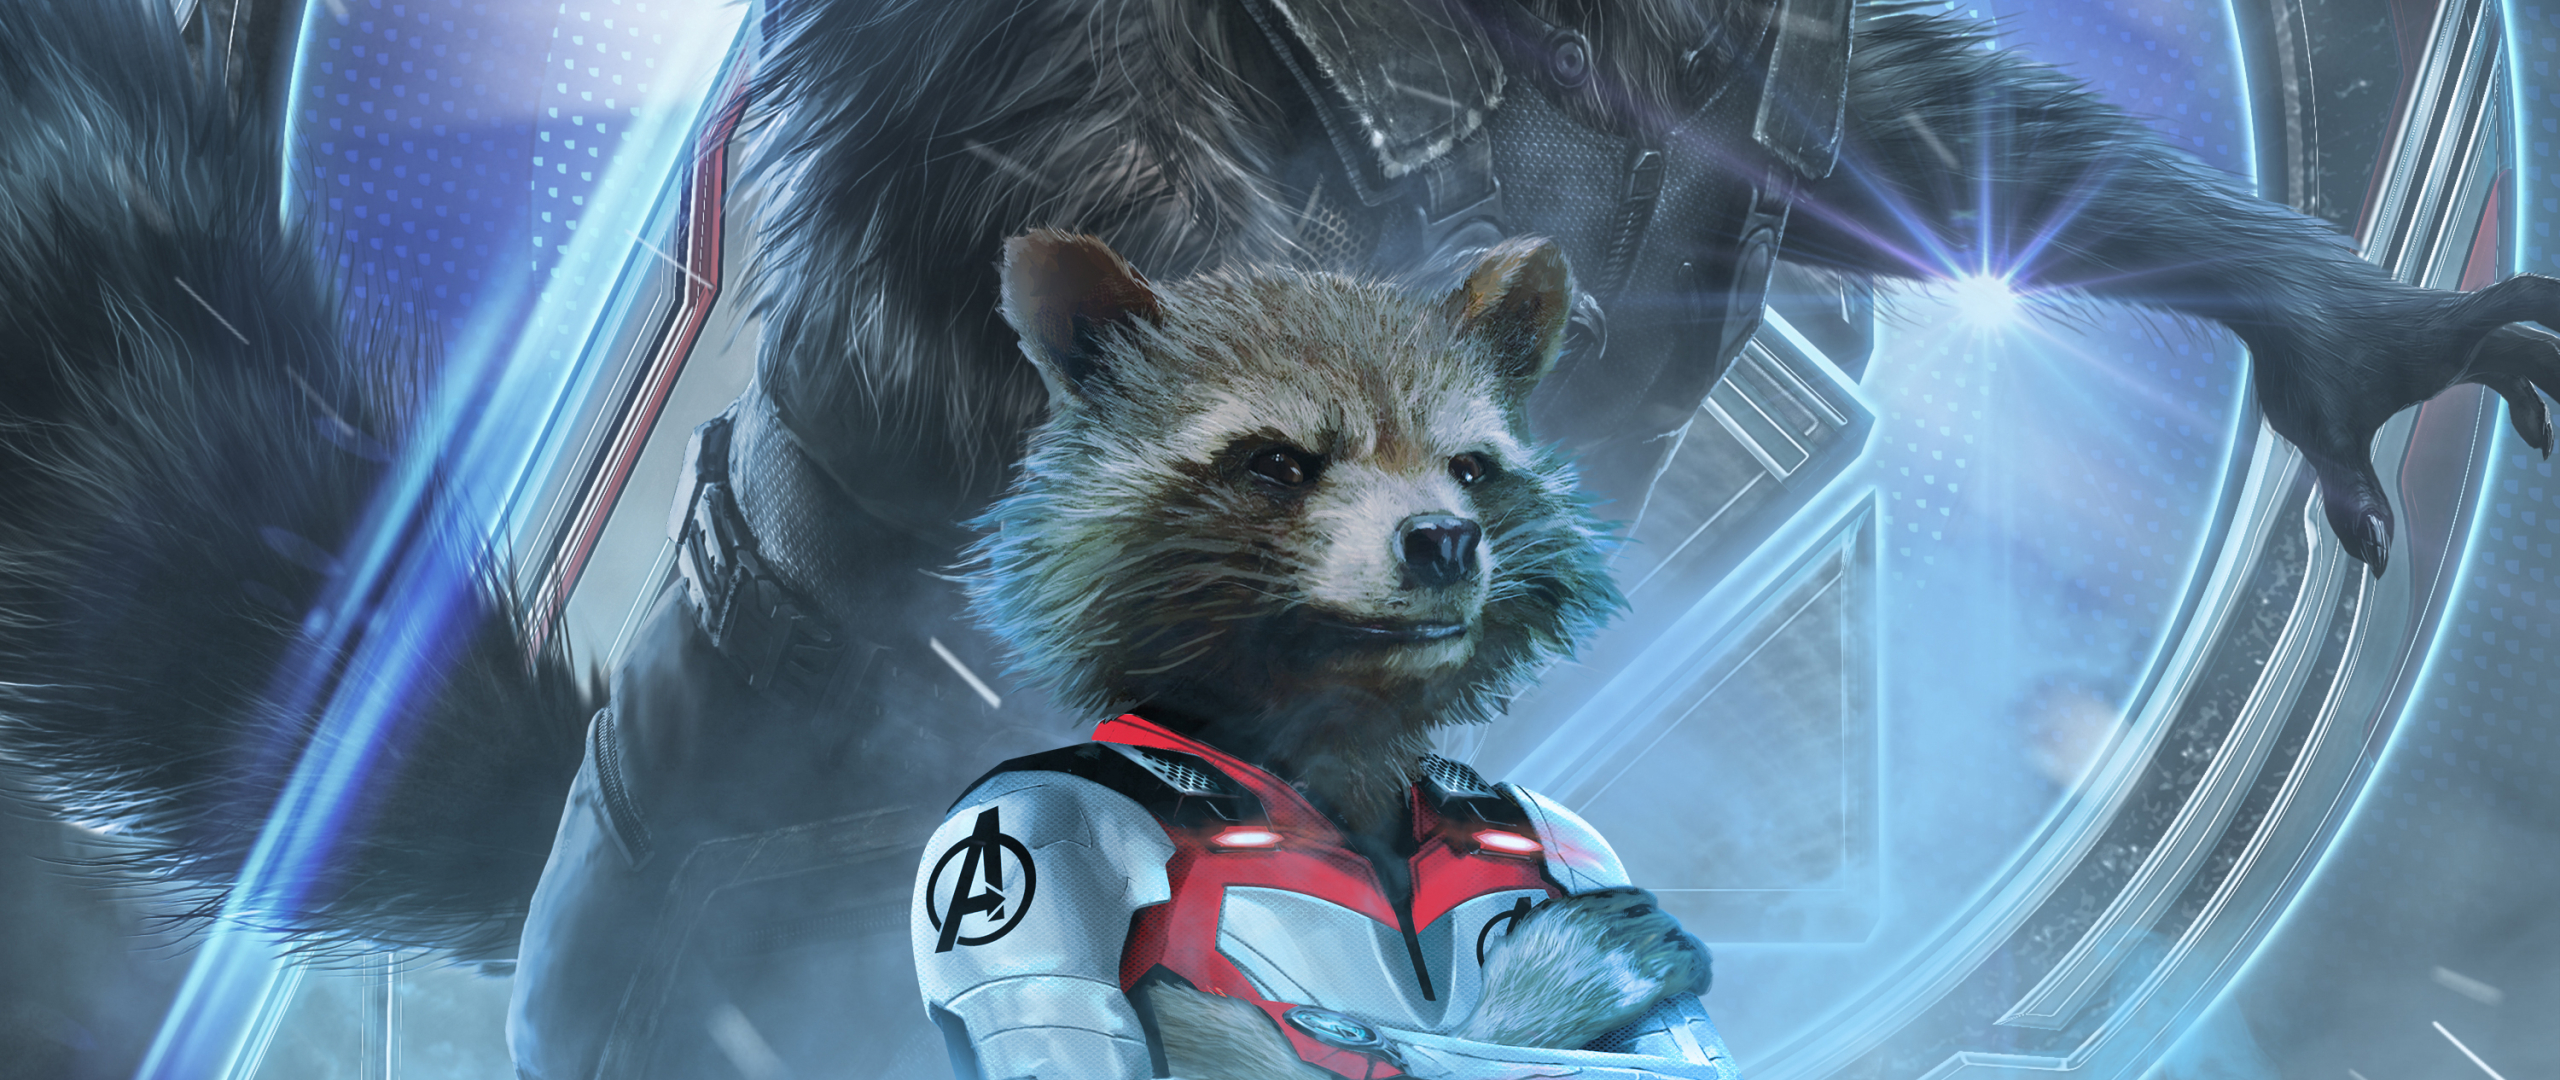 2560x1080 Avengers Endgame Rocket Raccoon Poster Art 